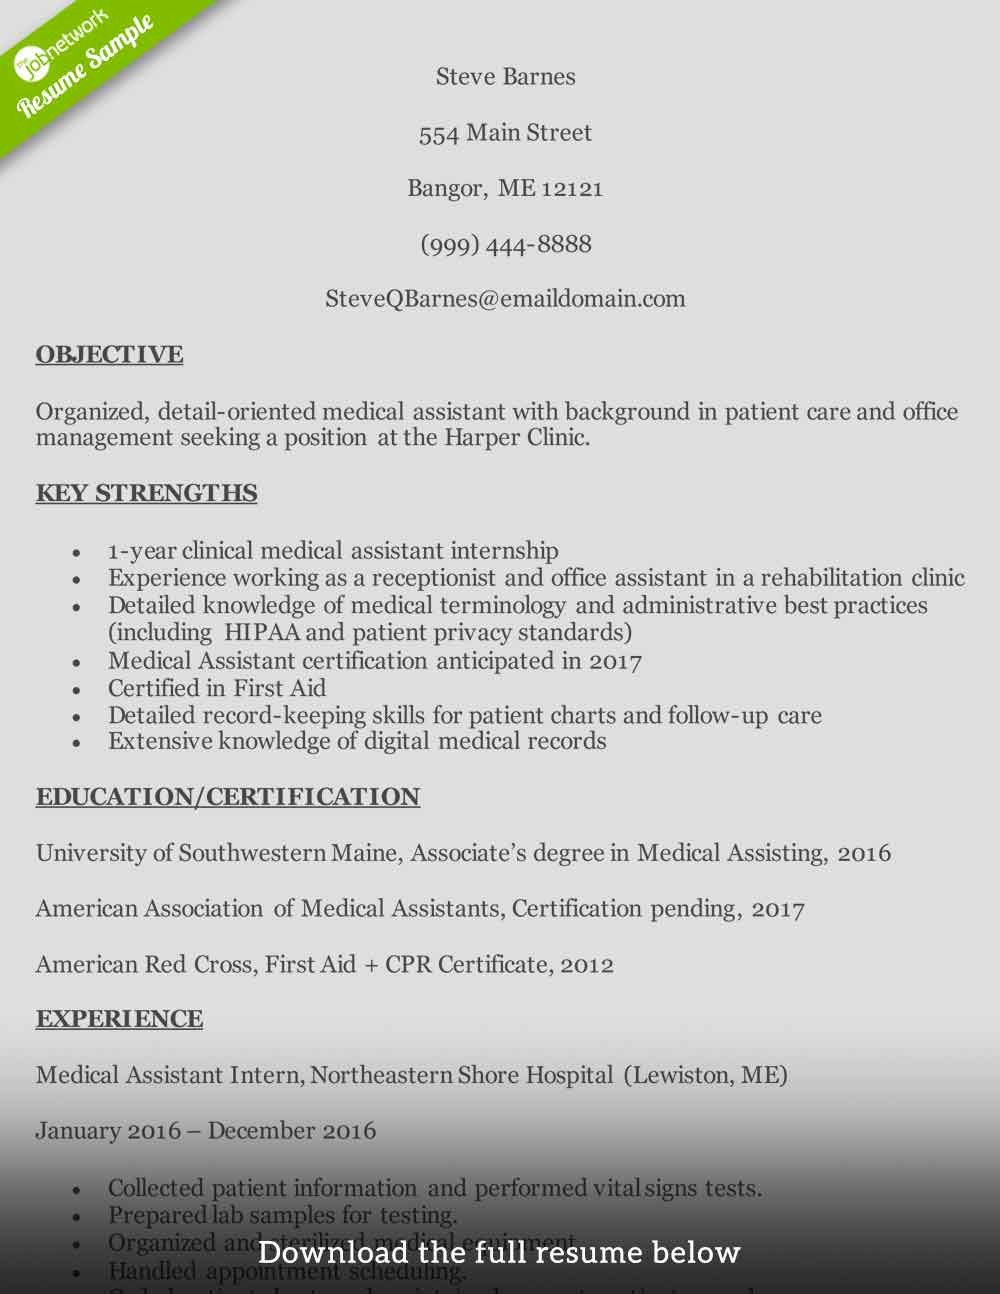 Resume Samples Medical assistant Entry Level How to Write A Medical assistant Resume (with Examples)